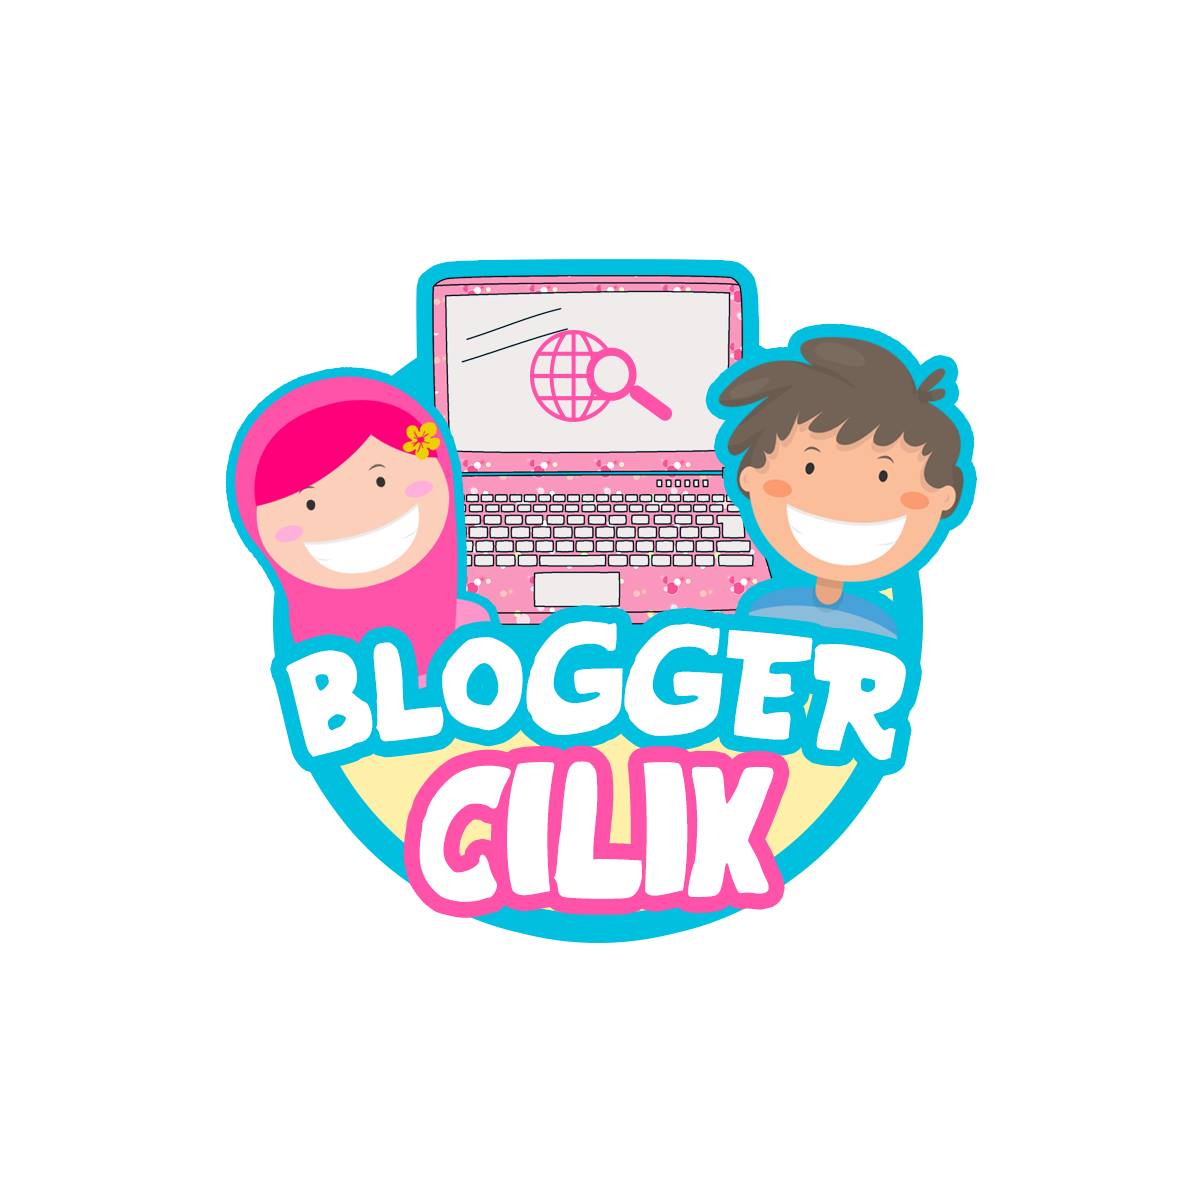 blogger cilik